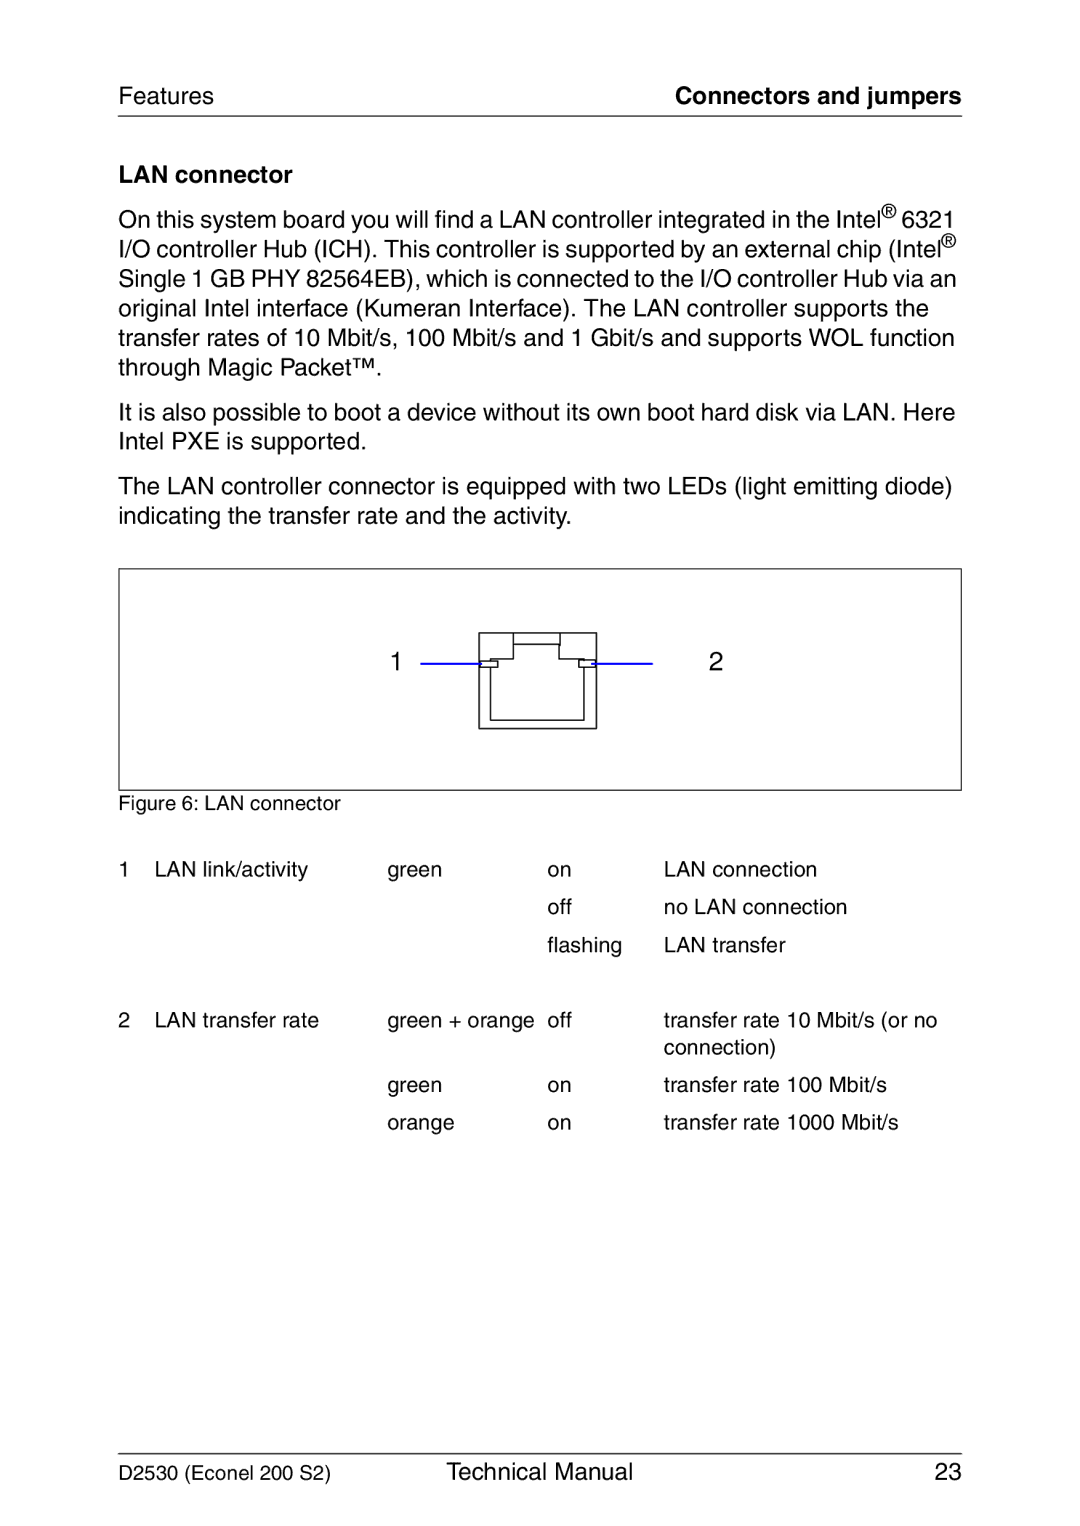 Fujitsu D2530 technical manual Features, LAN connector 